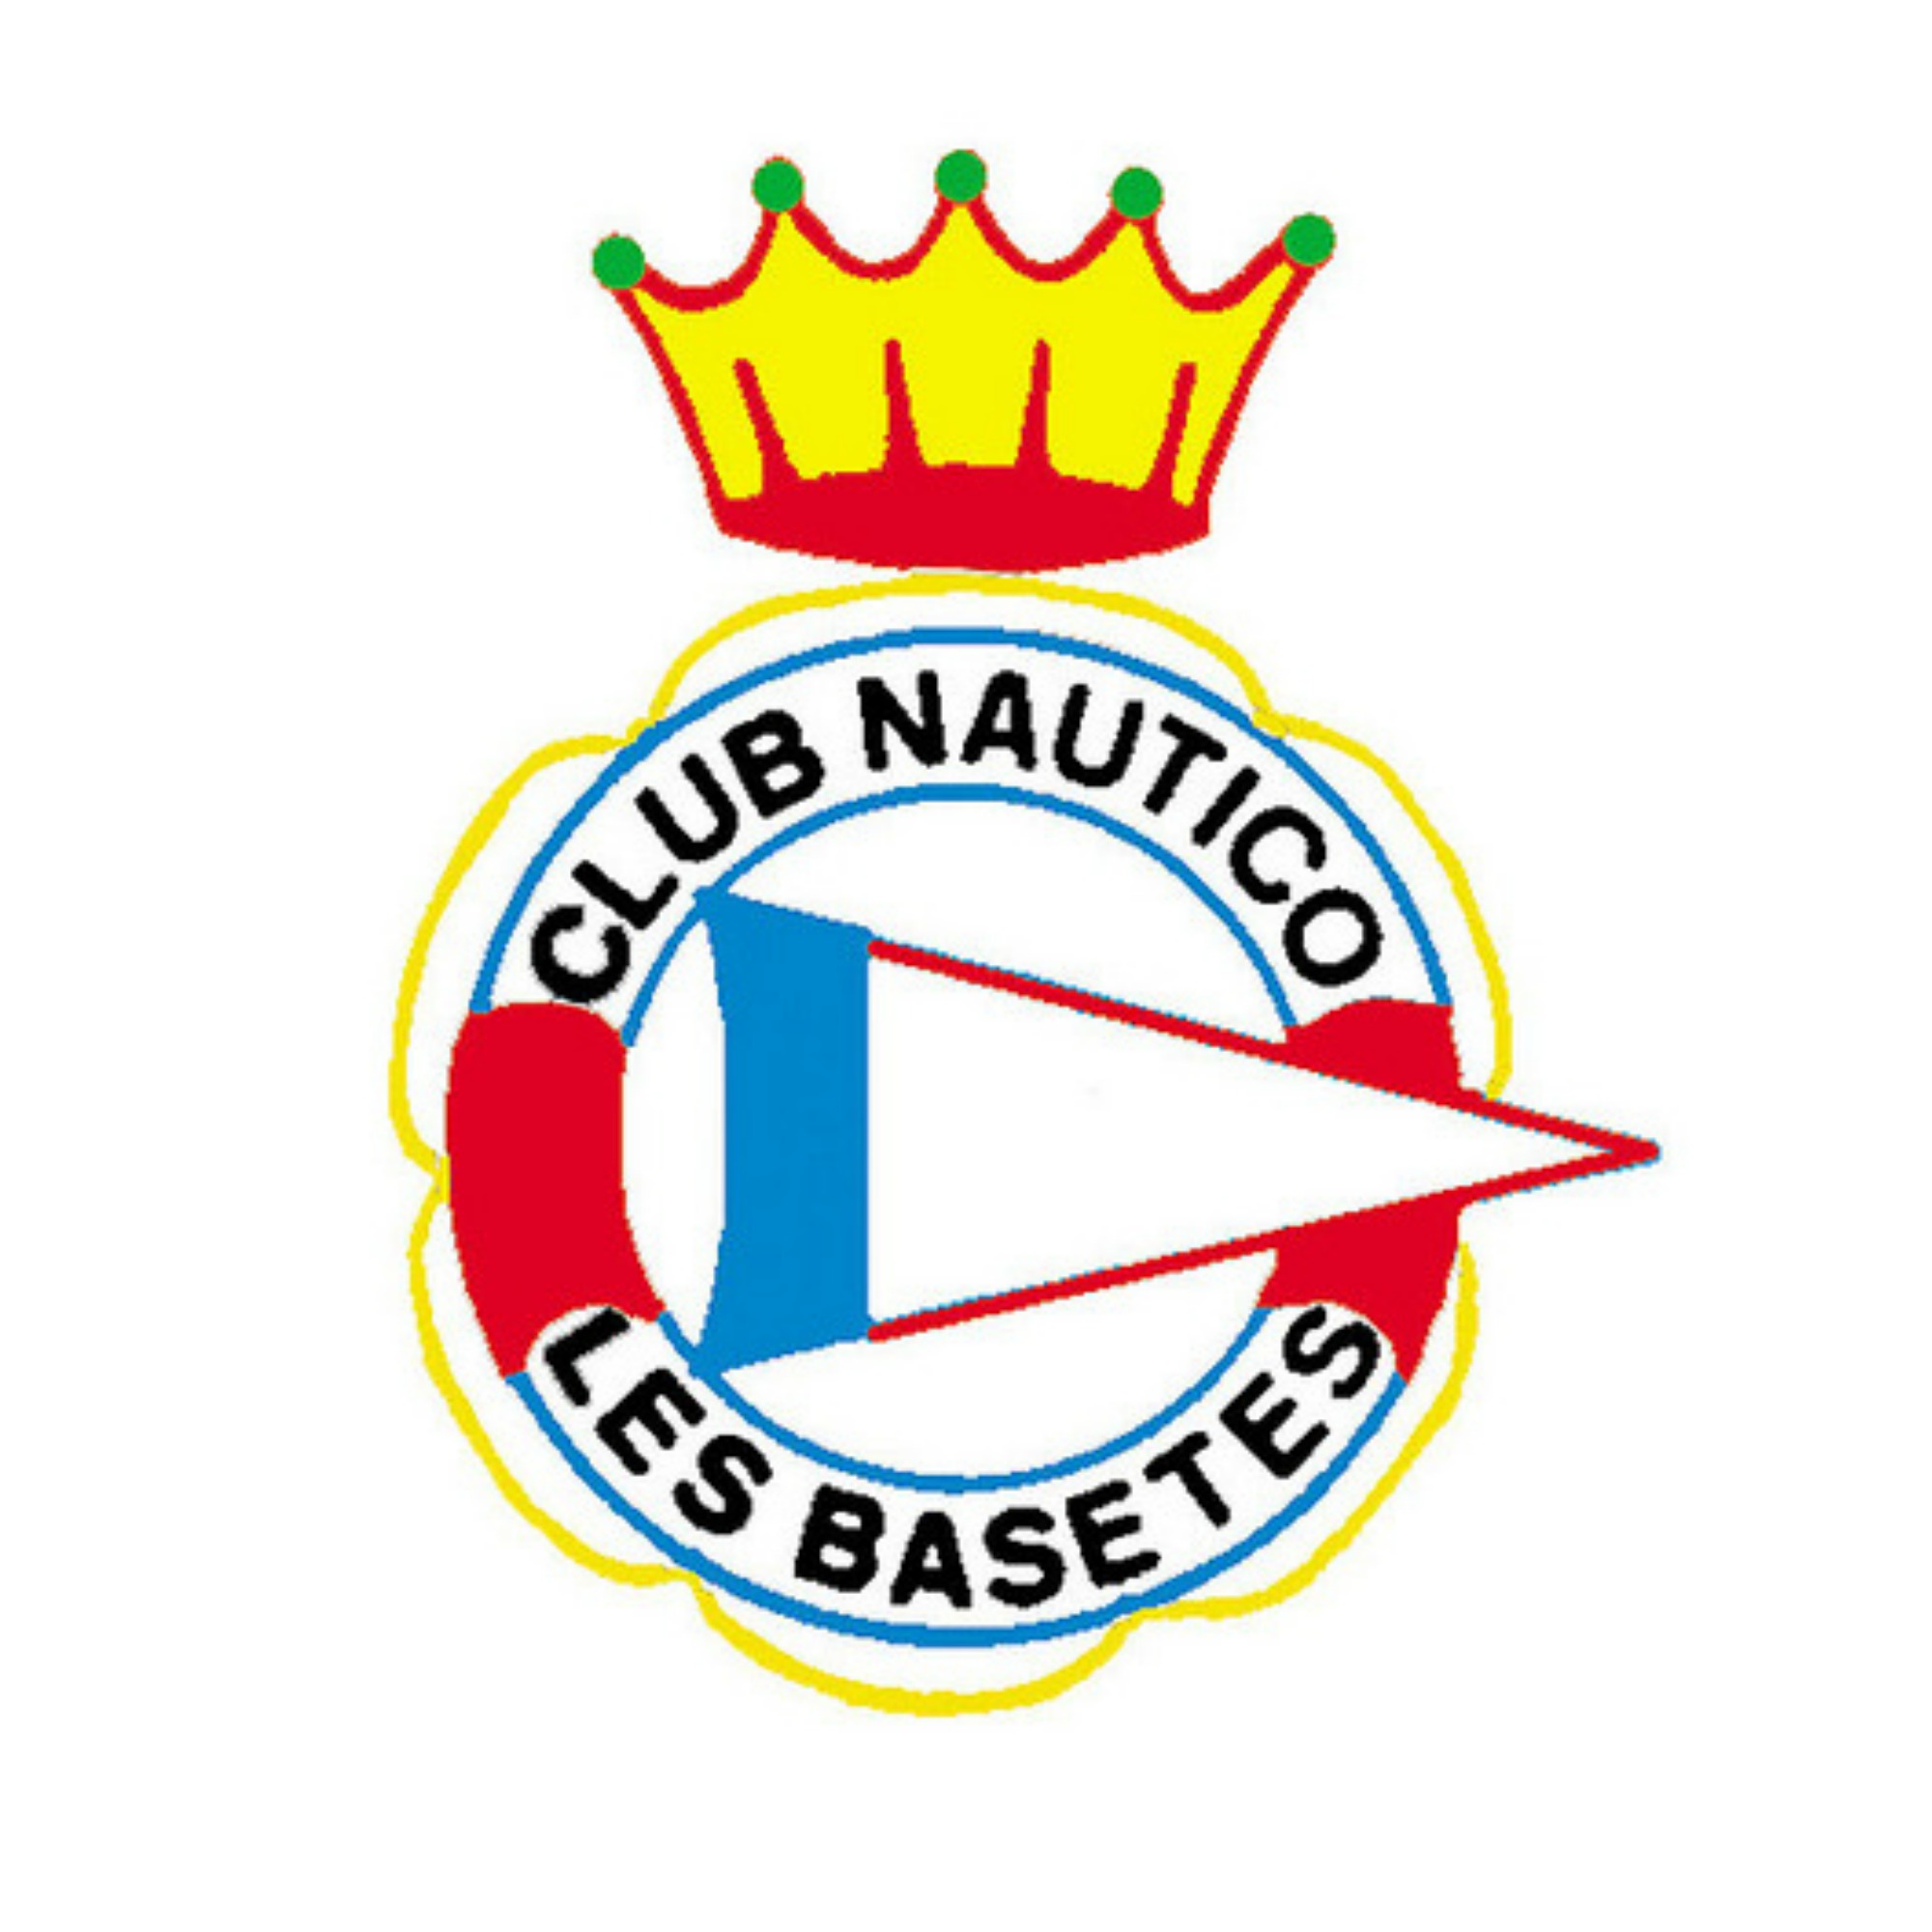 Club Náutico (Yachtclub) Les Basetes